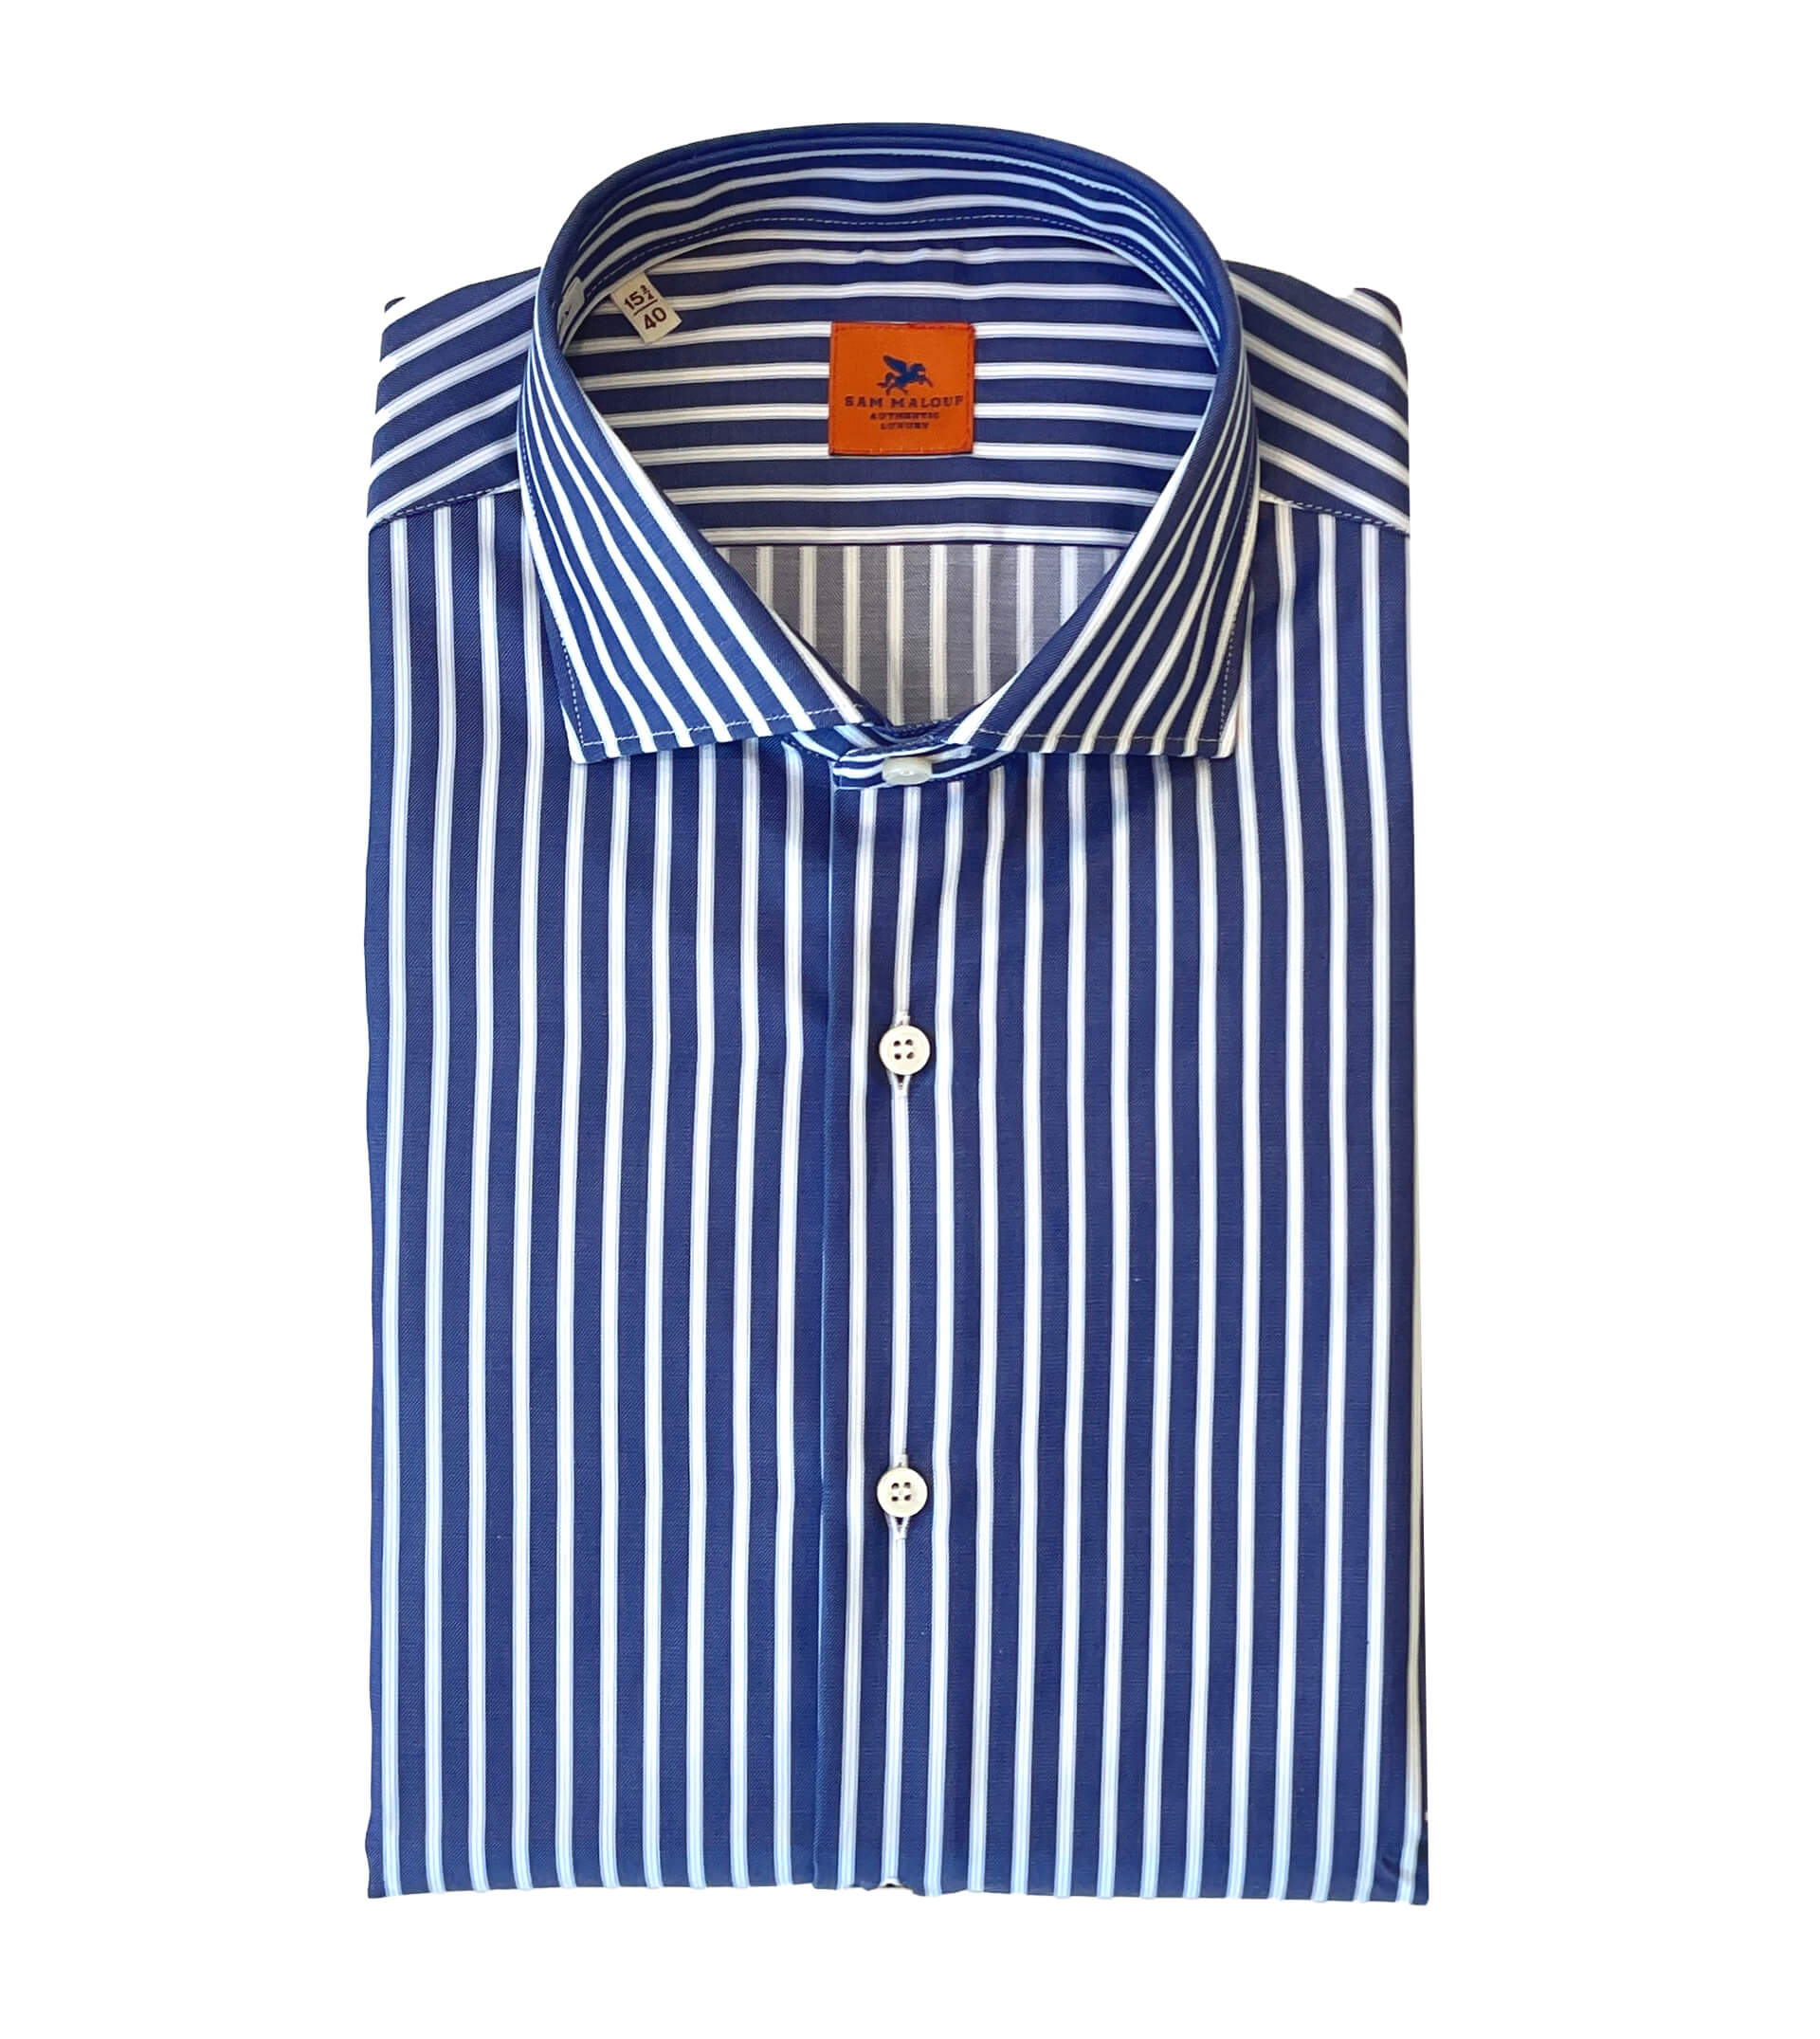 SAM MALOUF ORANGE LABEL Stripe Sport Shirt